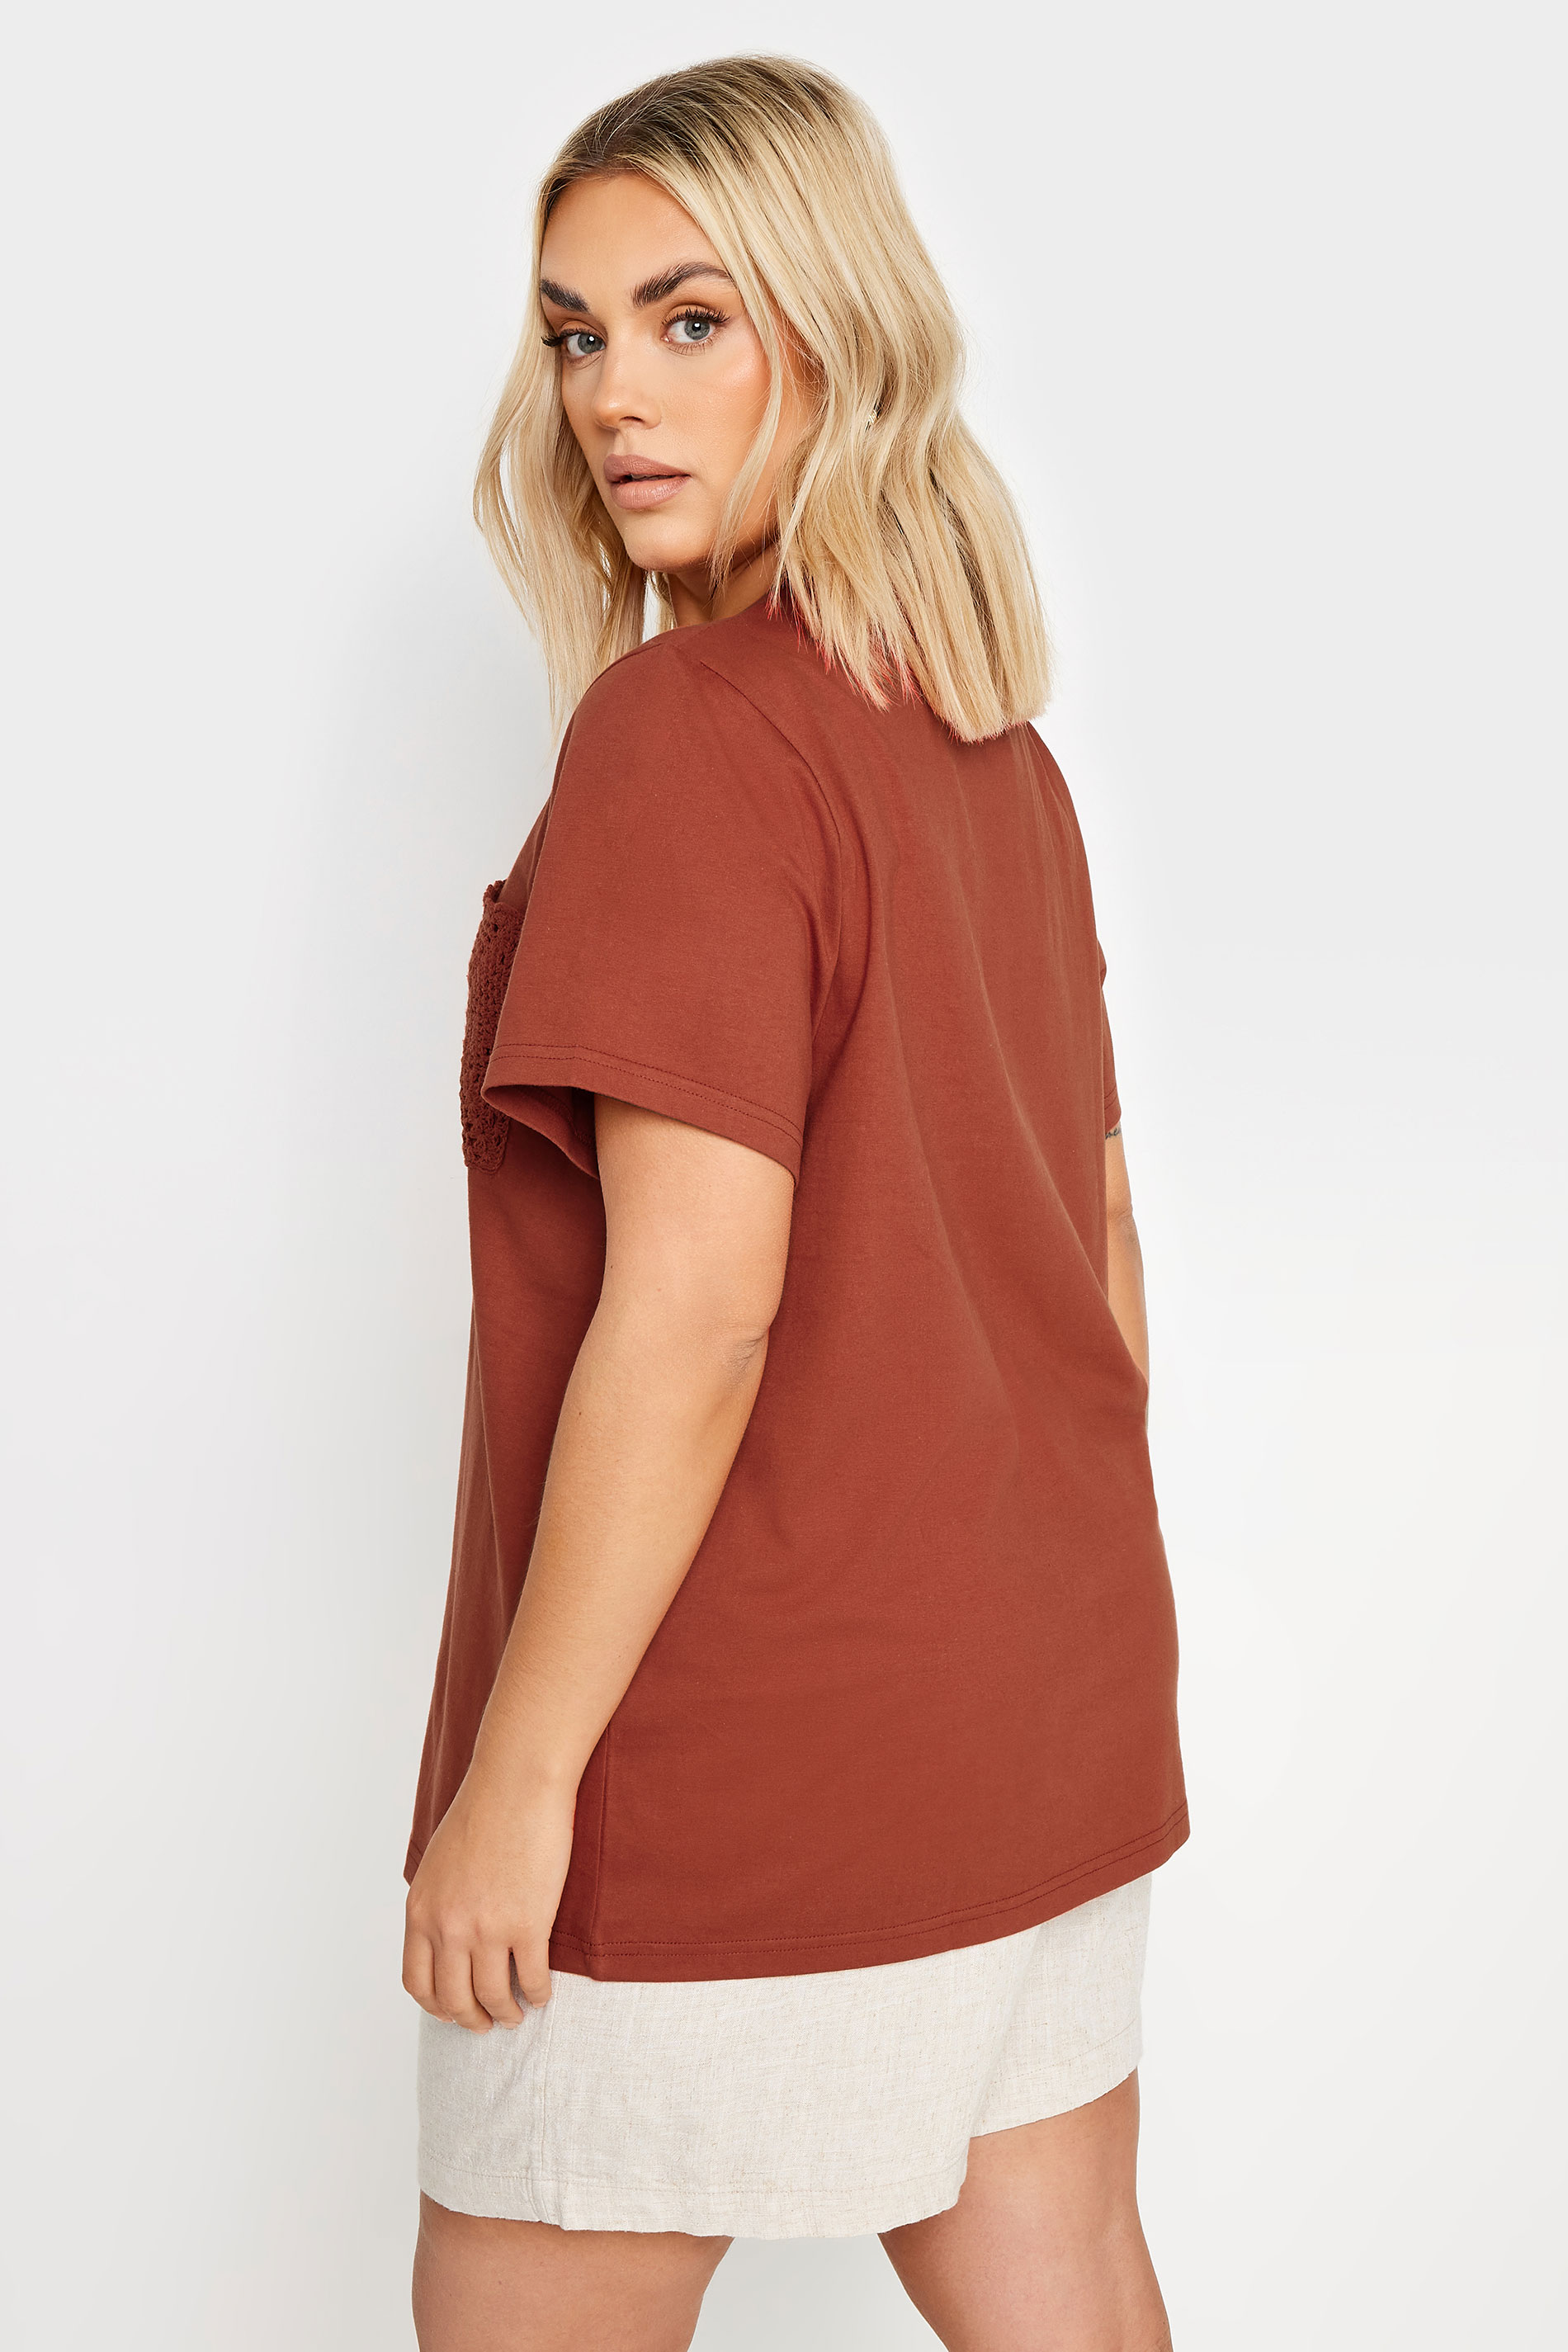 YOURS Plus Size Rust Orange Crochet Pocket T-Shirt | Yours Clothing 3